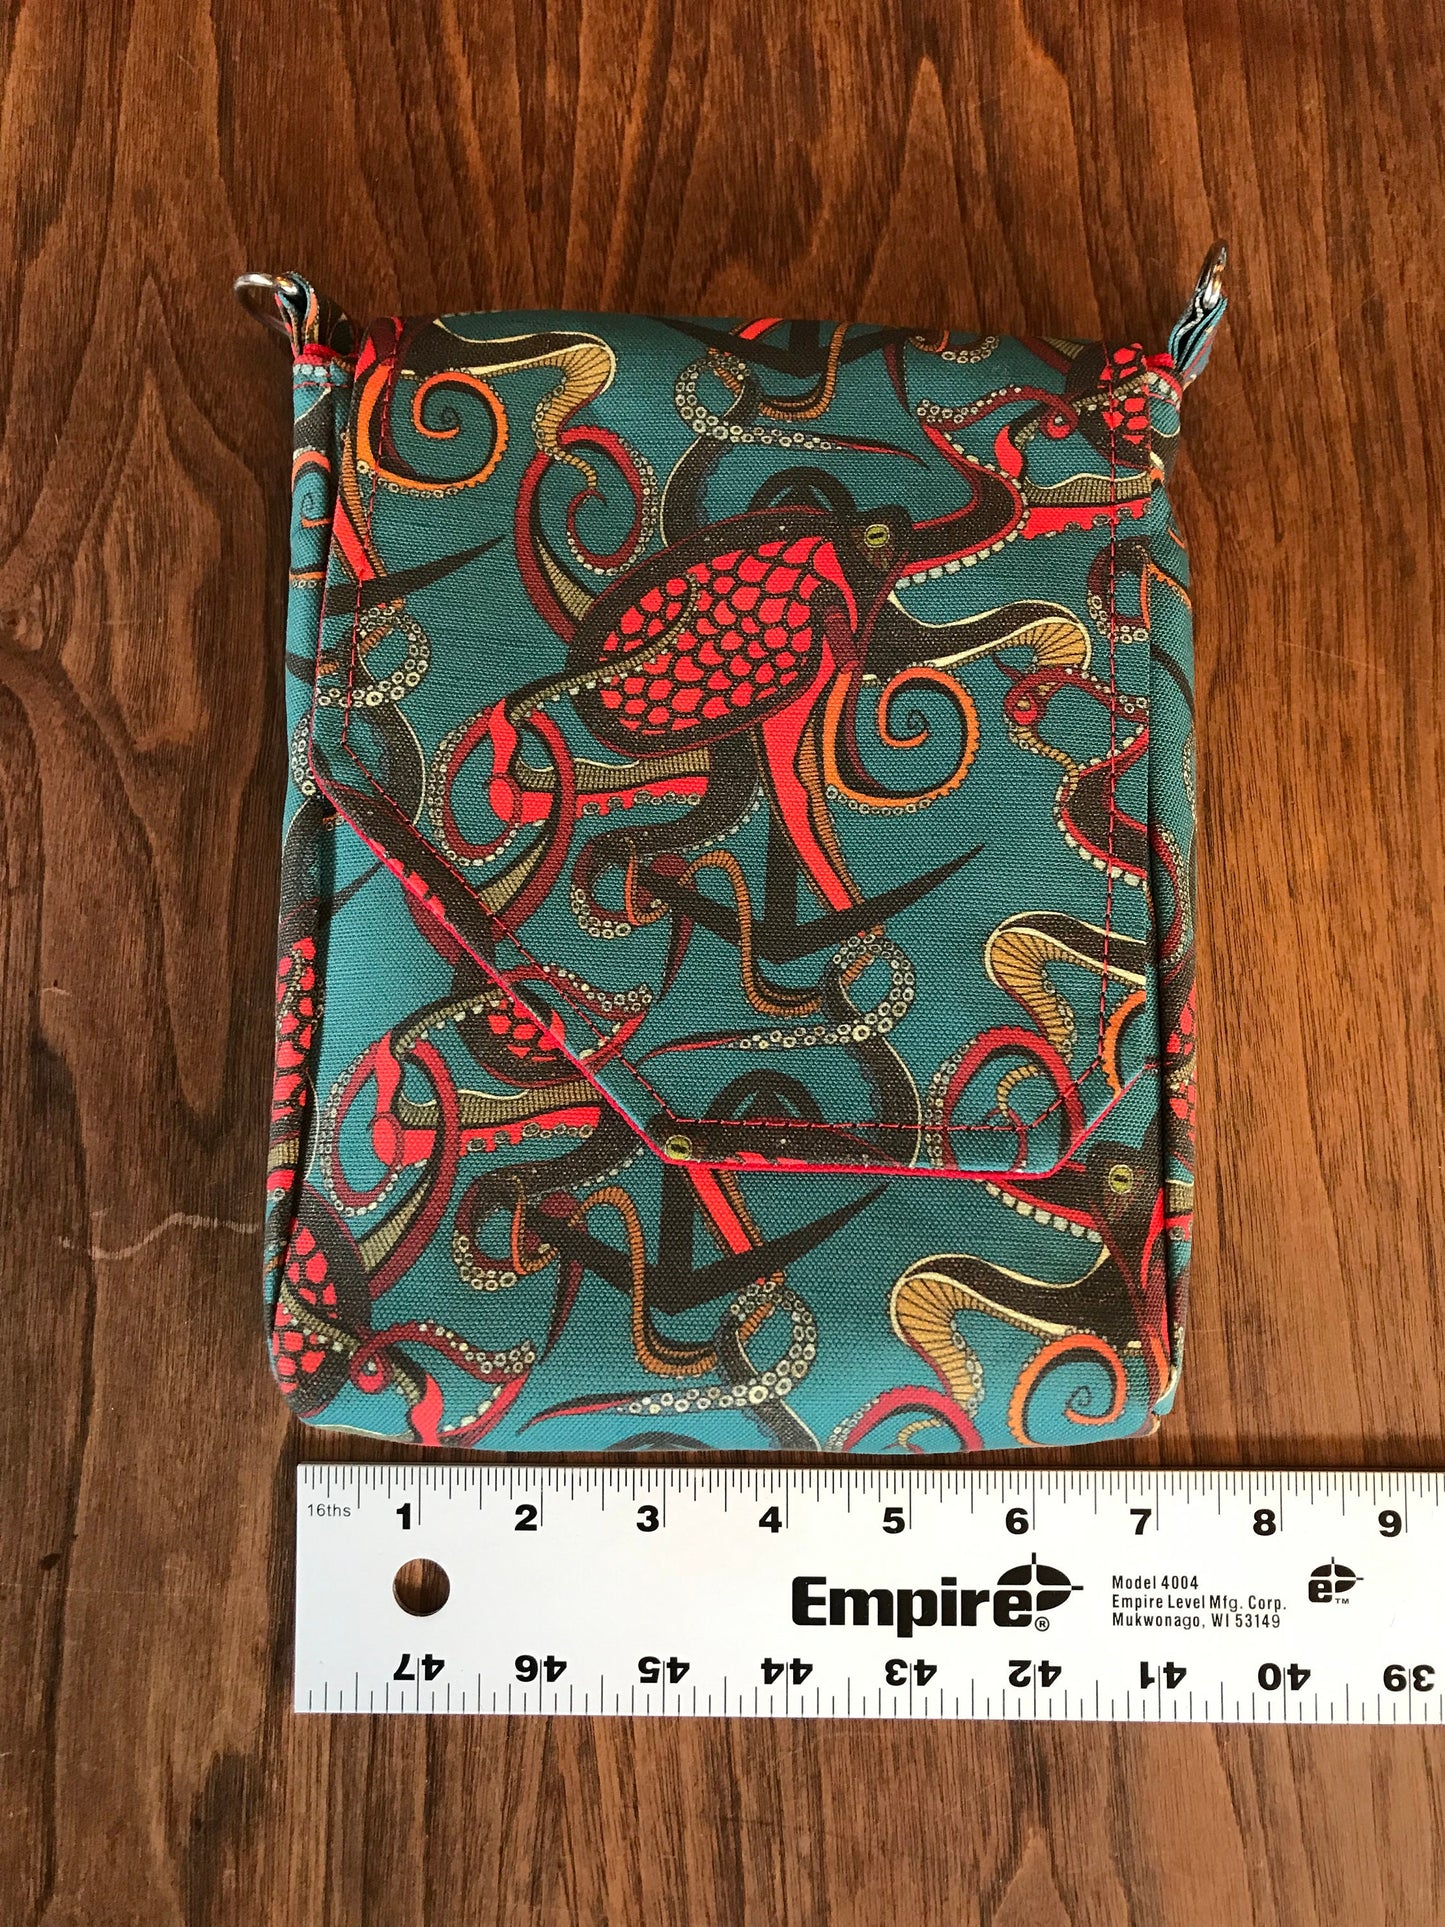 Octopus purse, kraken crossbody bag, blue and red ocean purse, sea creature gift, gift for octopus lover, Seattle kraken fan gift